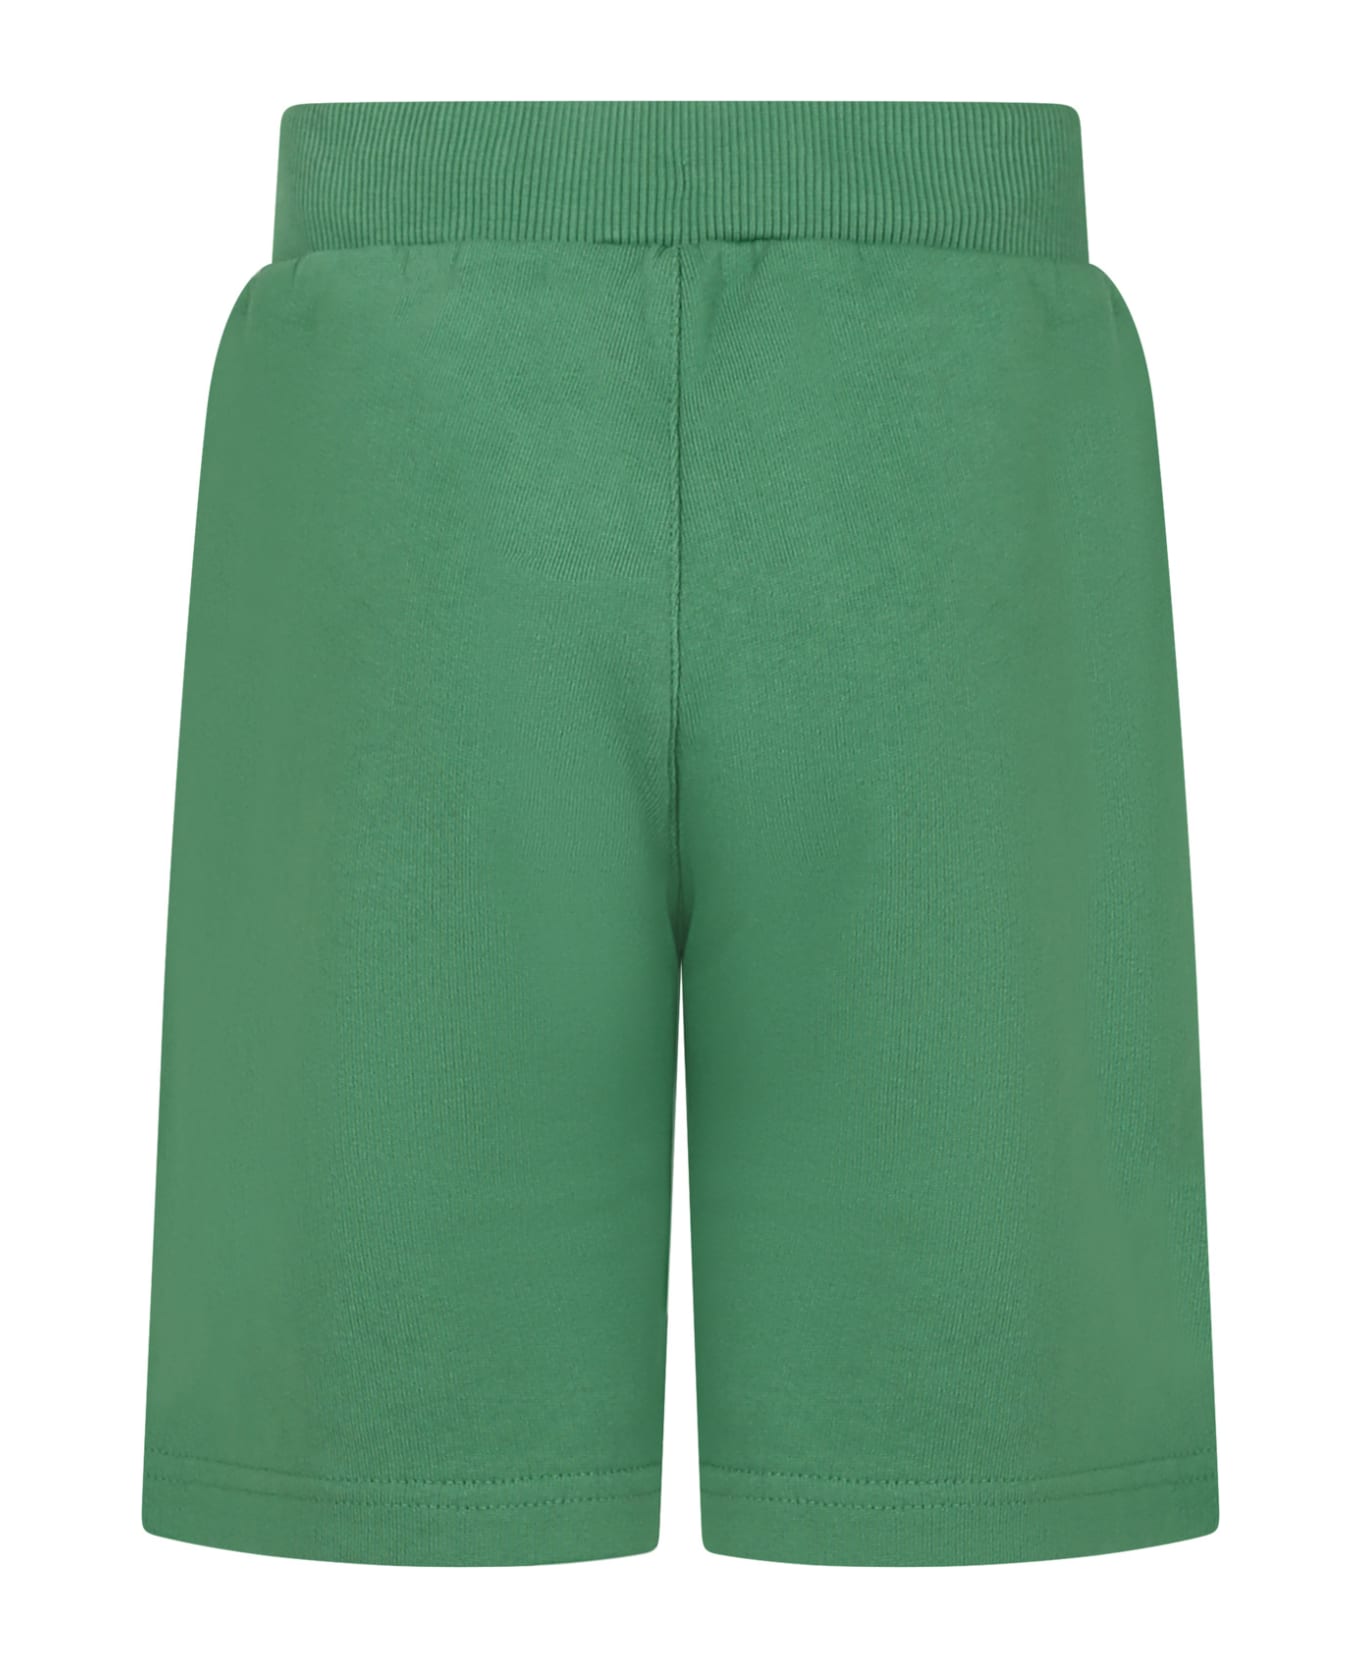 Kenzo Kids Green Shorts For Boy With Logo Print - Green